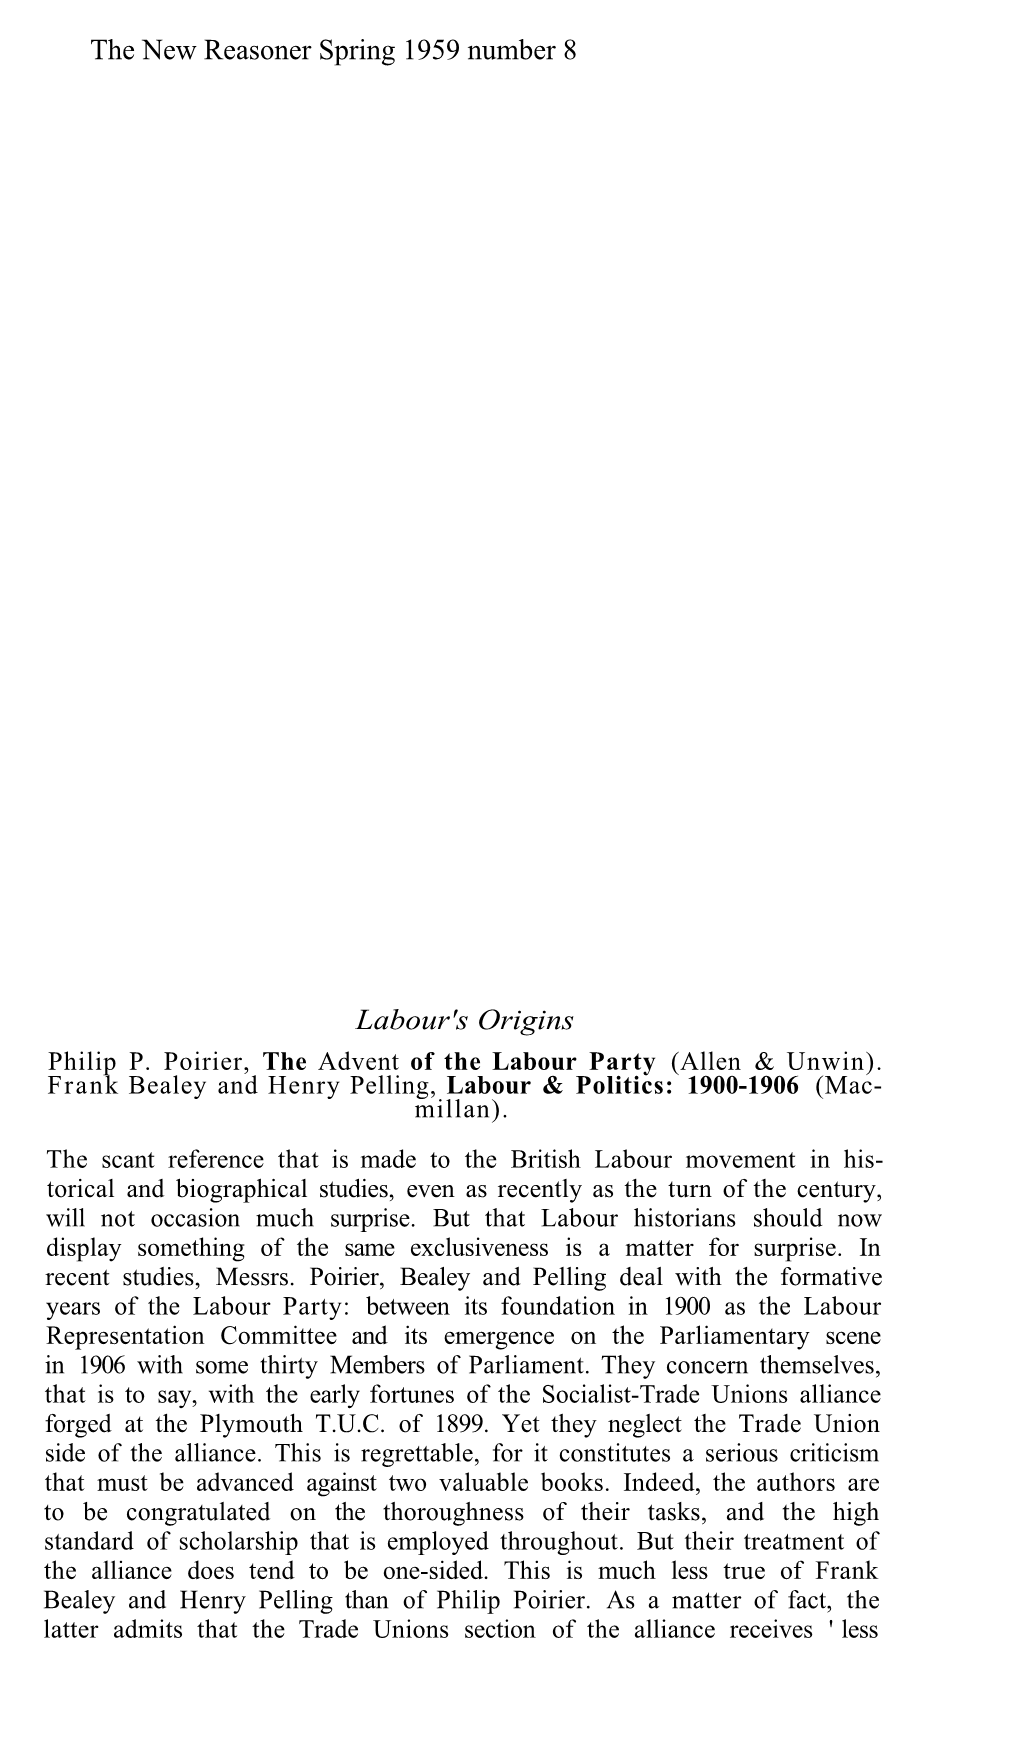 Labour's Origins the New Reasoner Spring 1959 Number 8